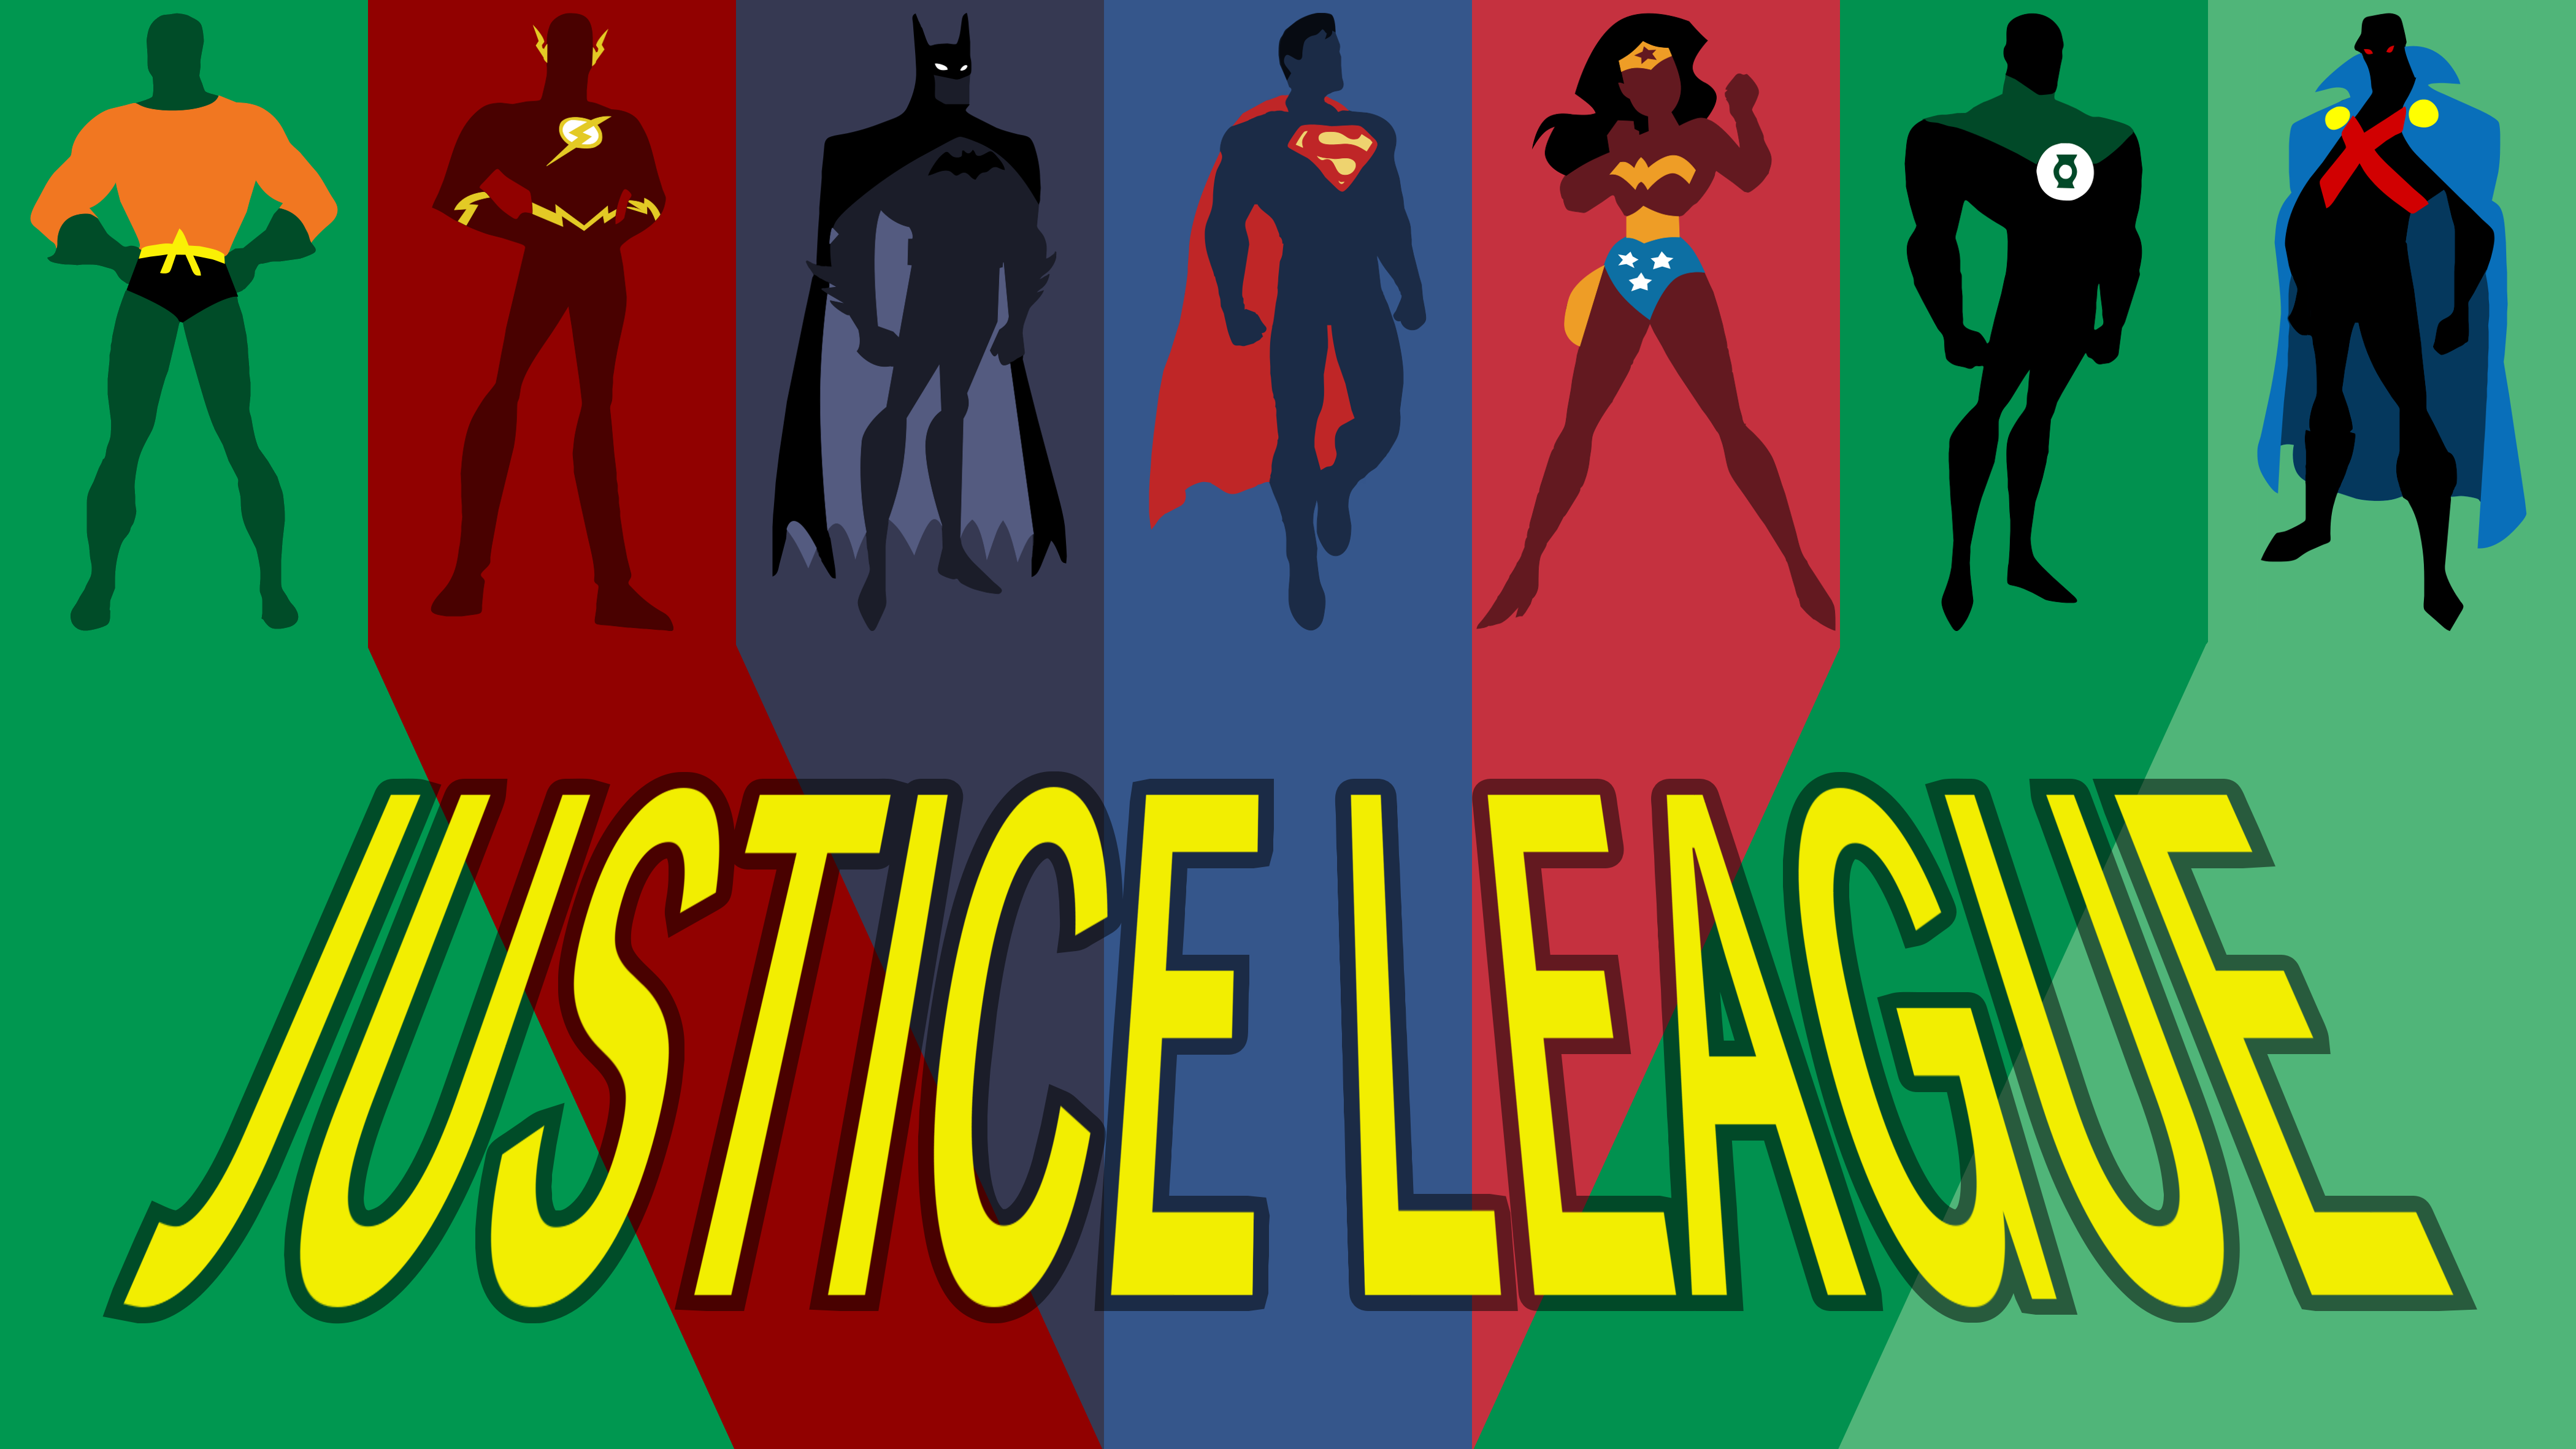 Justice League Minimal Wallpaper Pack by Cheetashock on DeviantArt